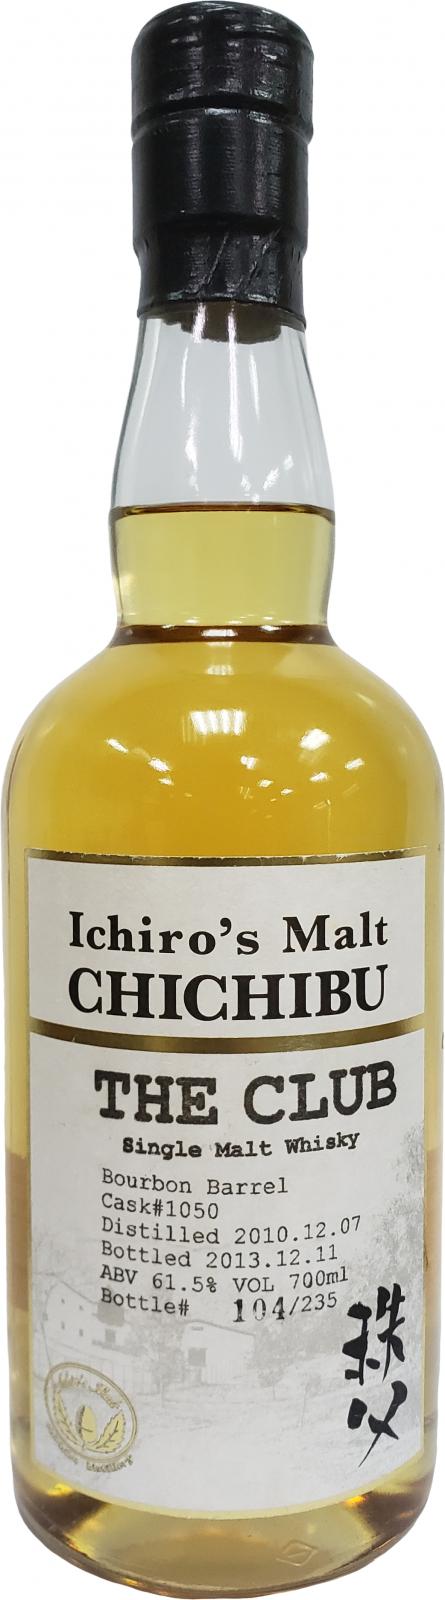 Chichibu 2010 The Club Bourbon Barrel #1050 61.5% 700ml